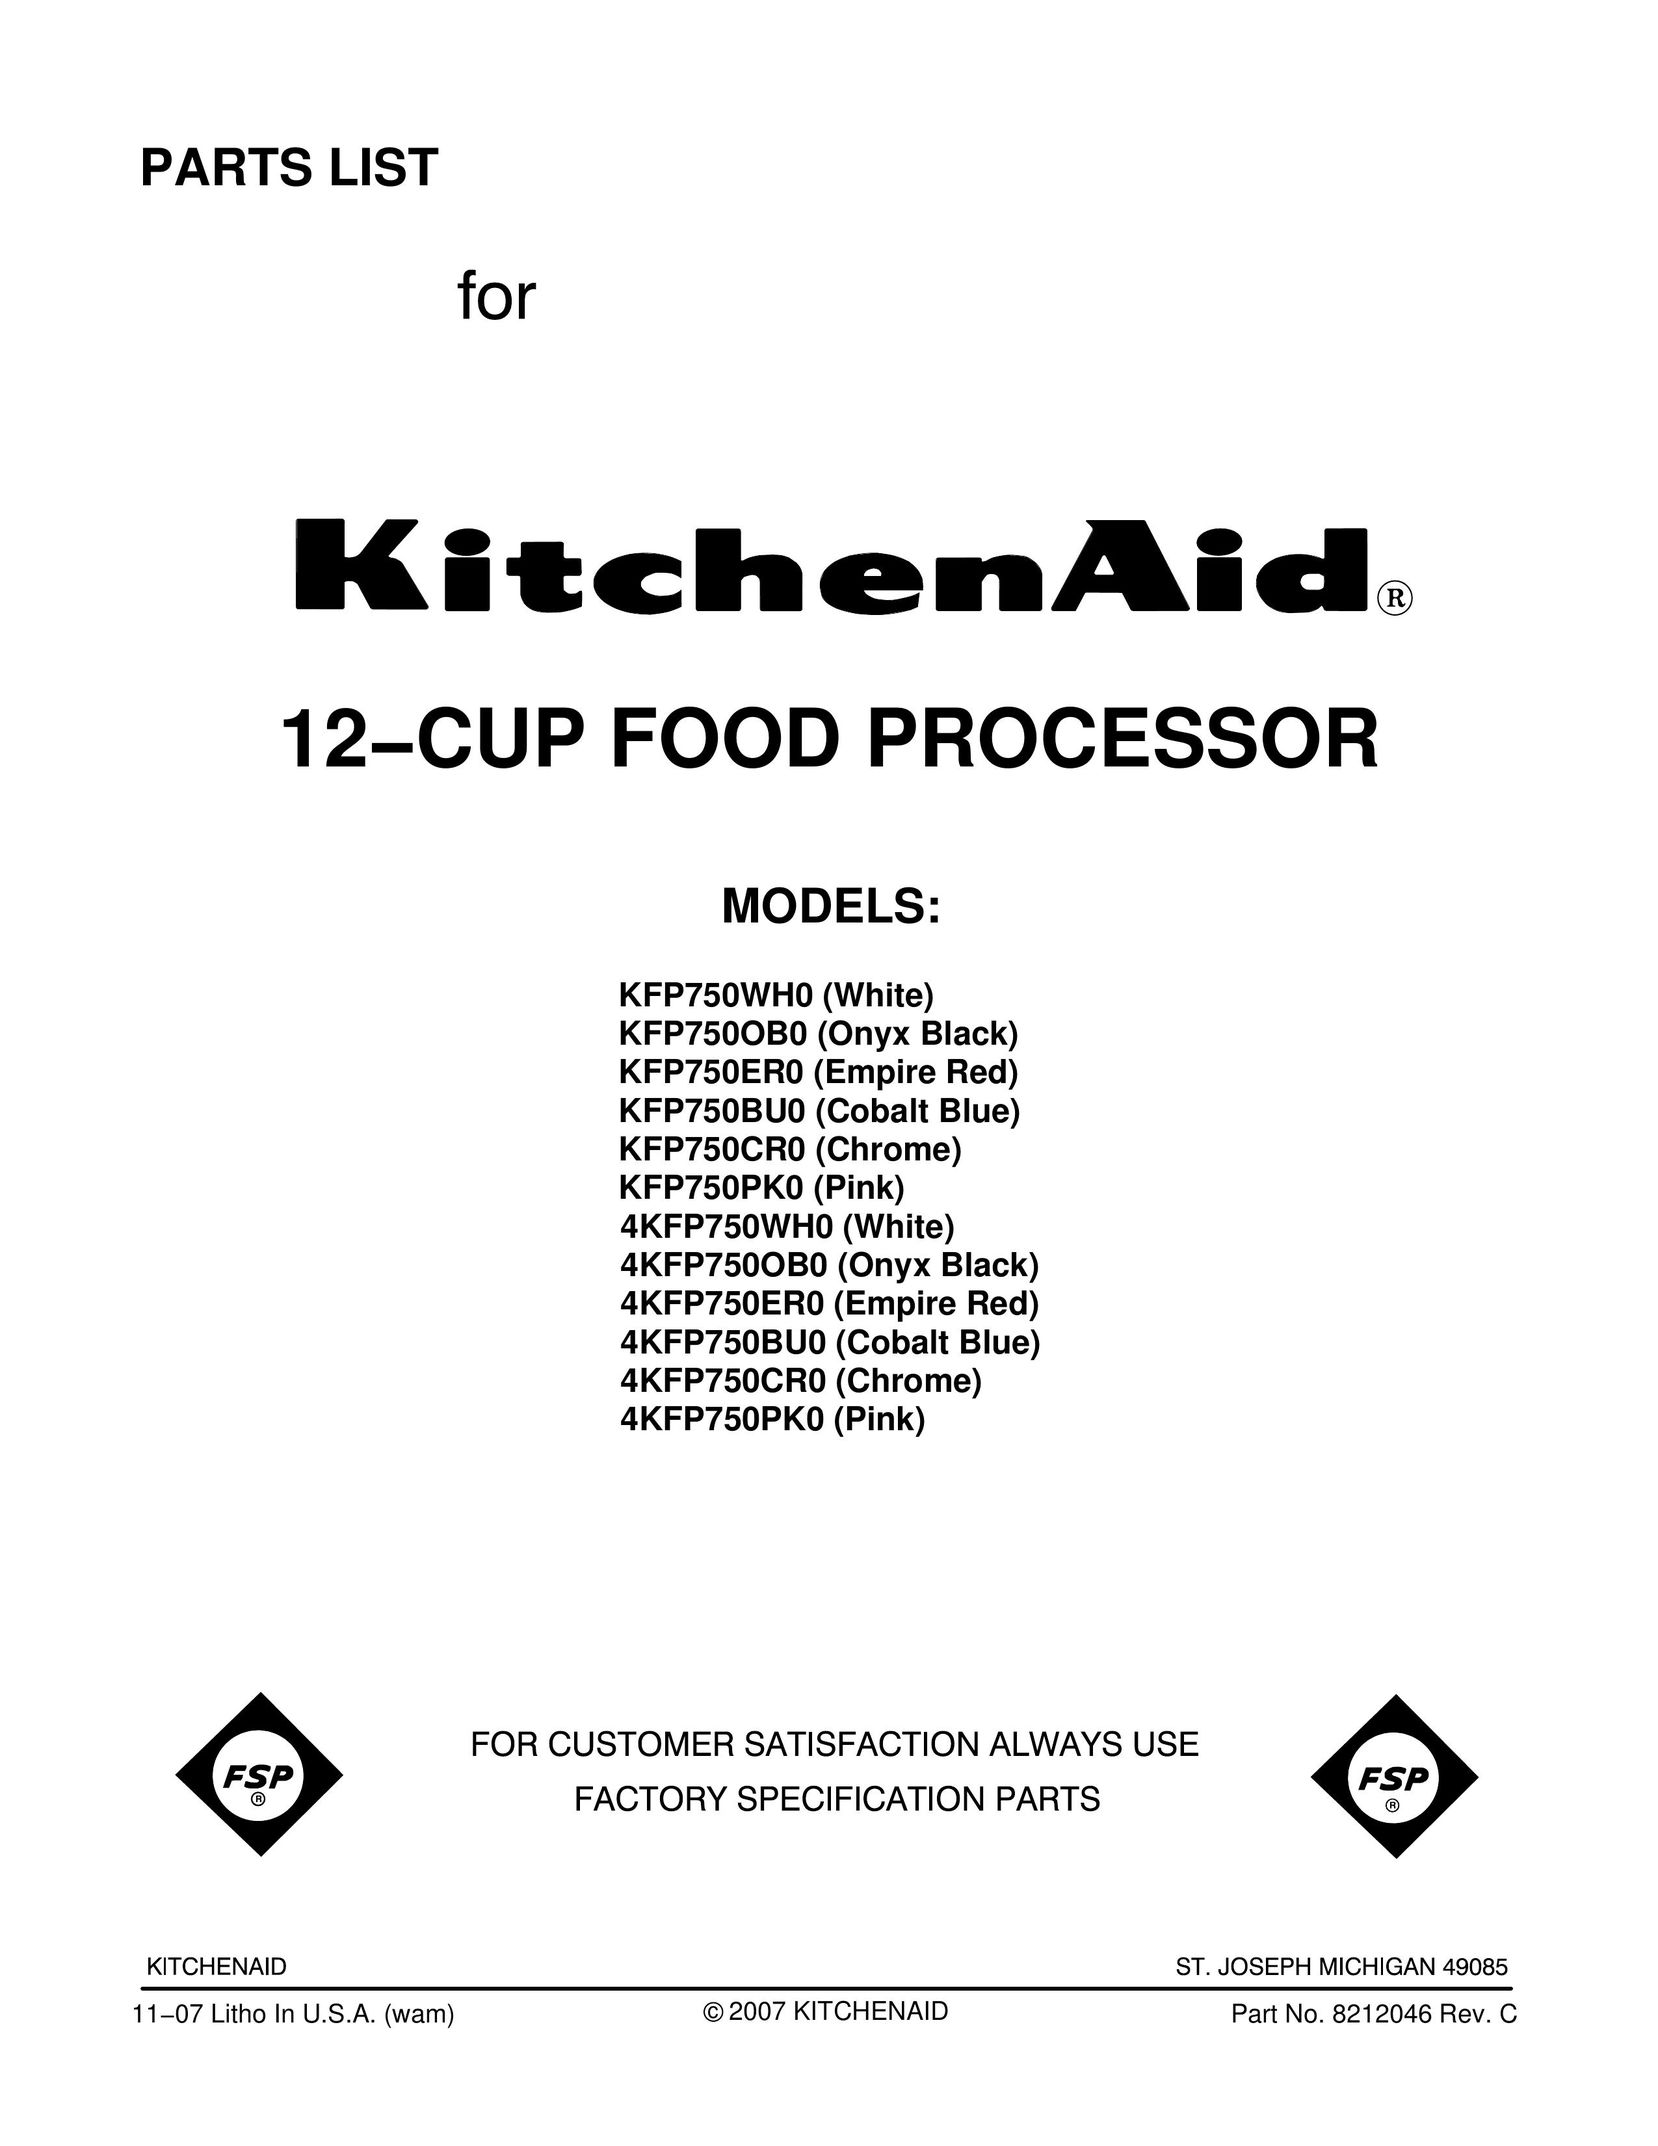 KitchenAid 4KFP750CR0 Blender User Manual